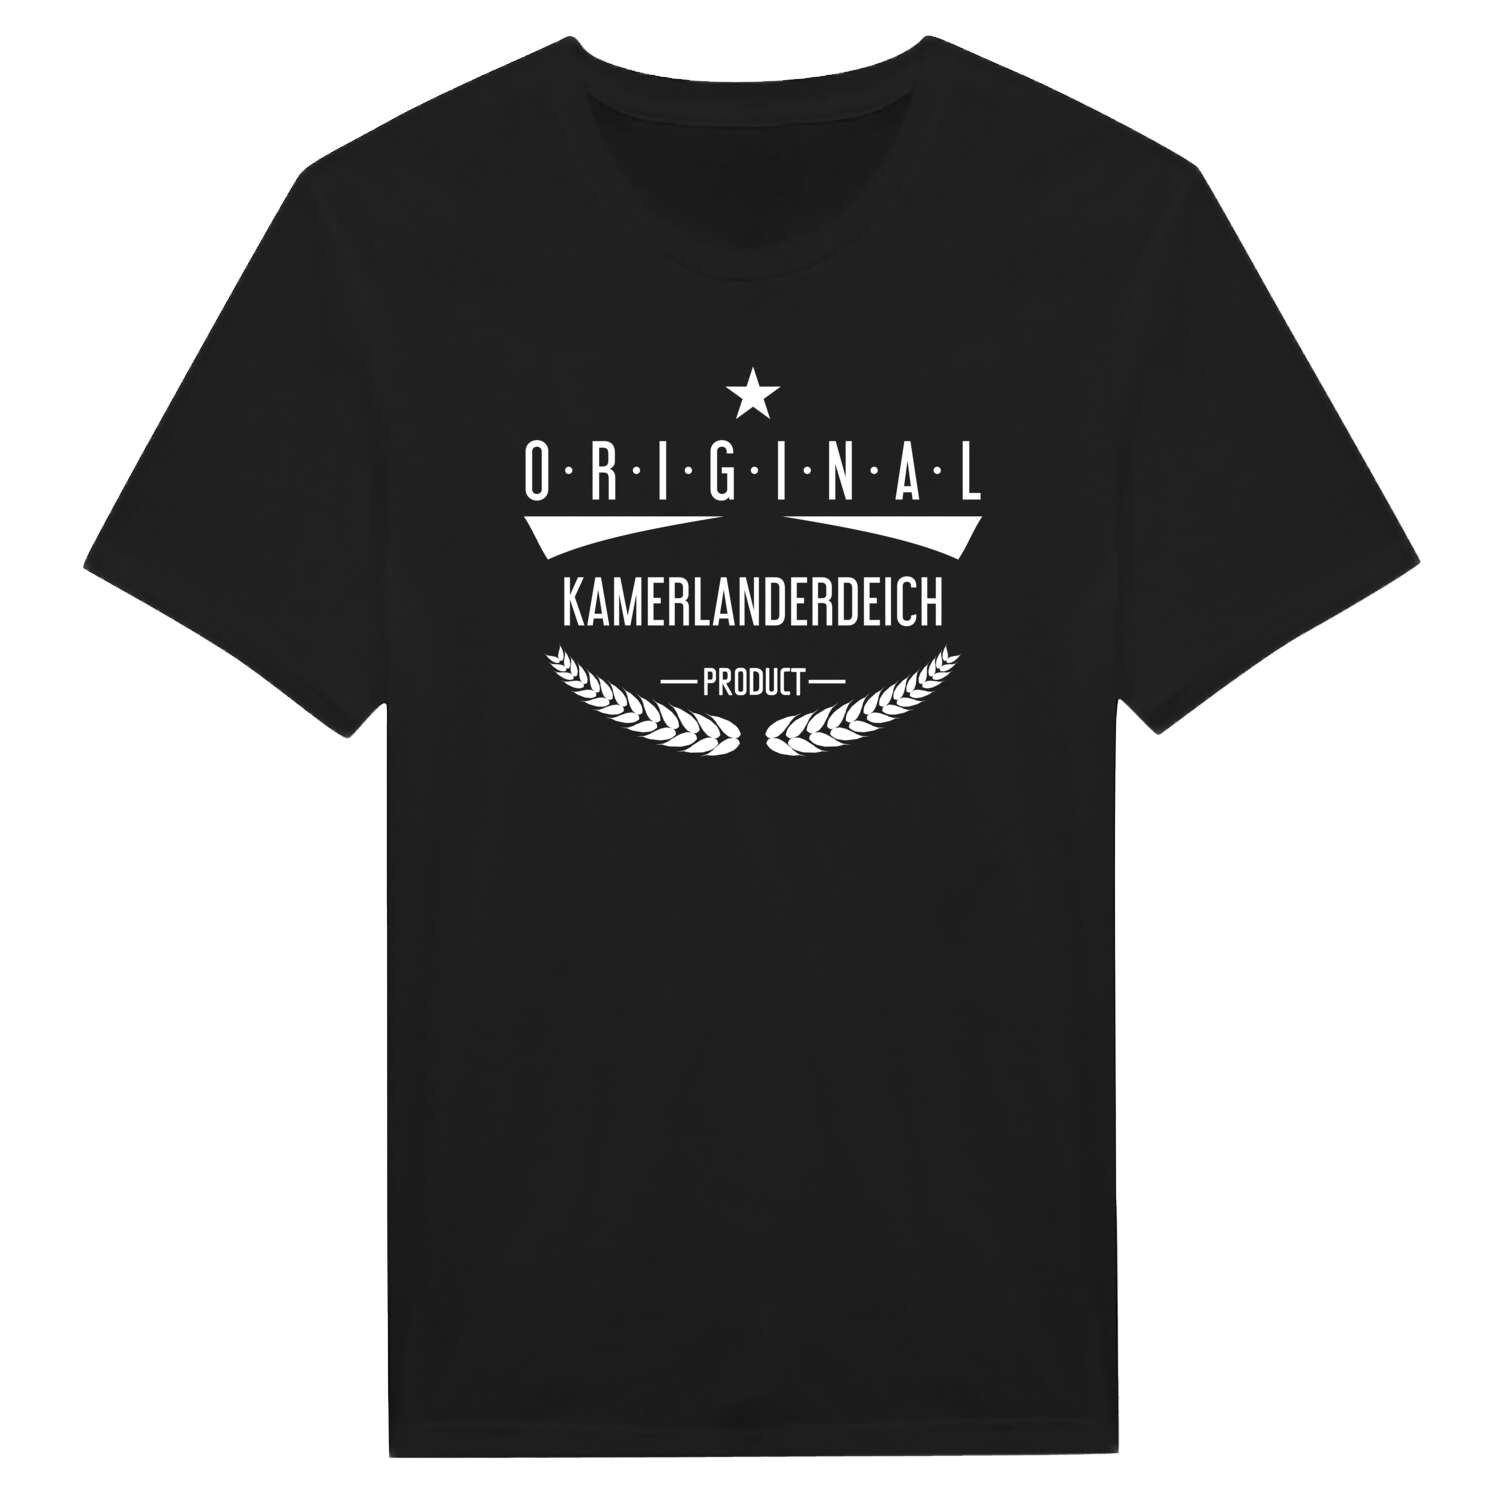 Kamerlanderdeich T-Shirt »Original Product«